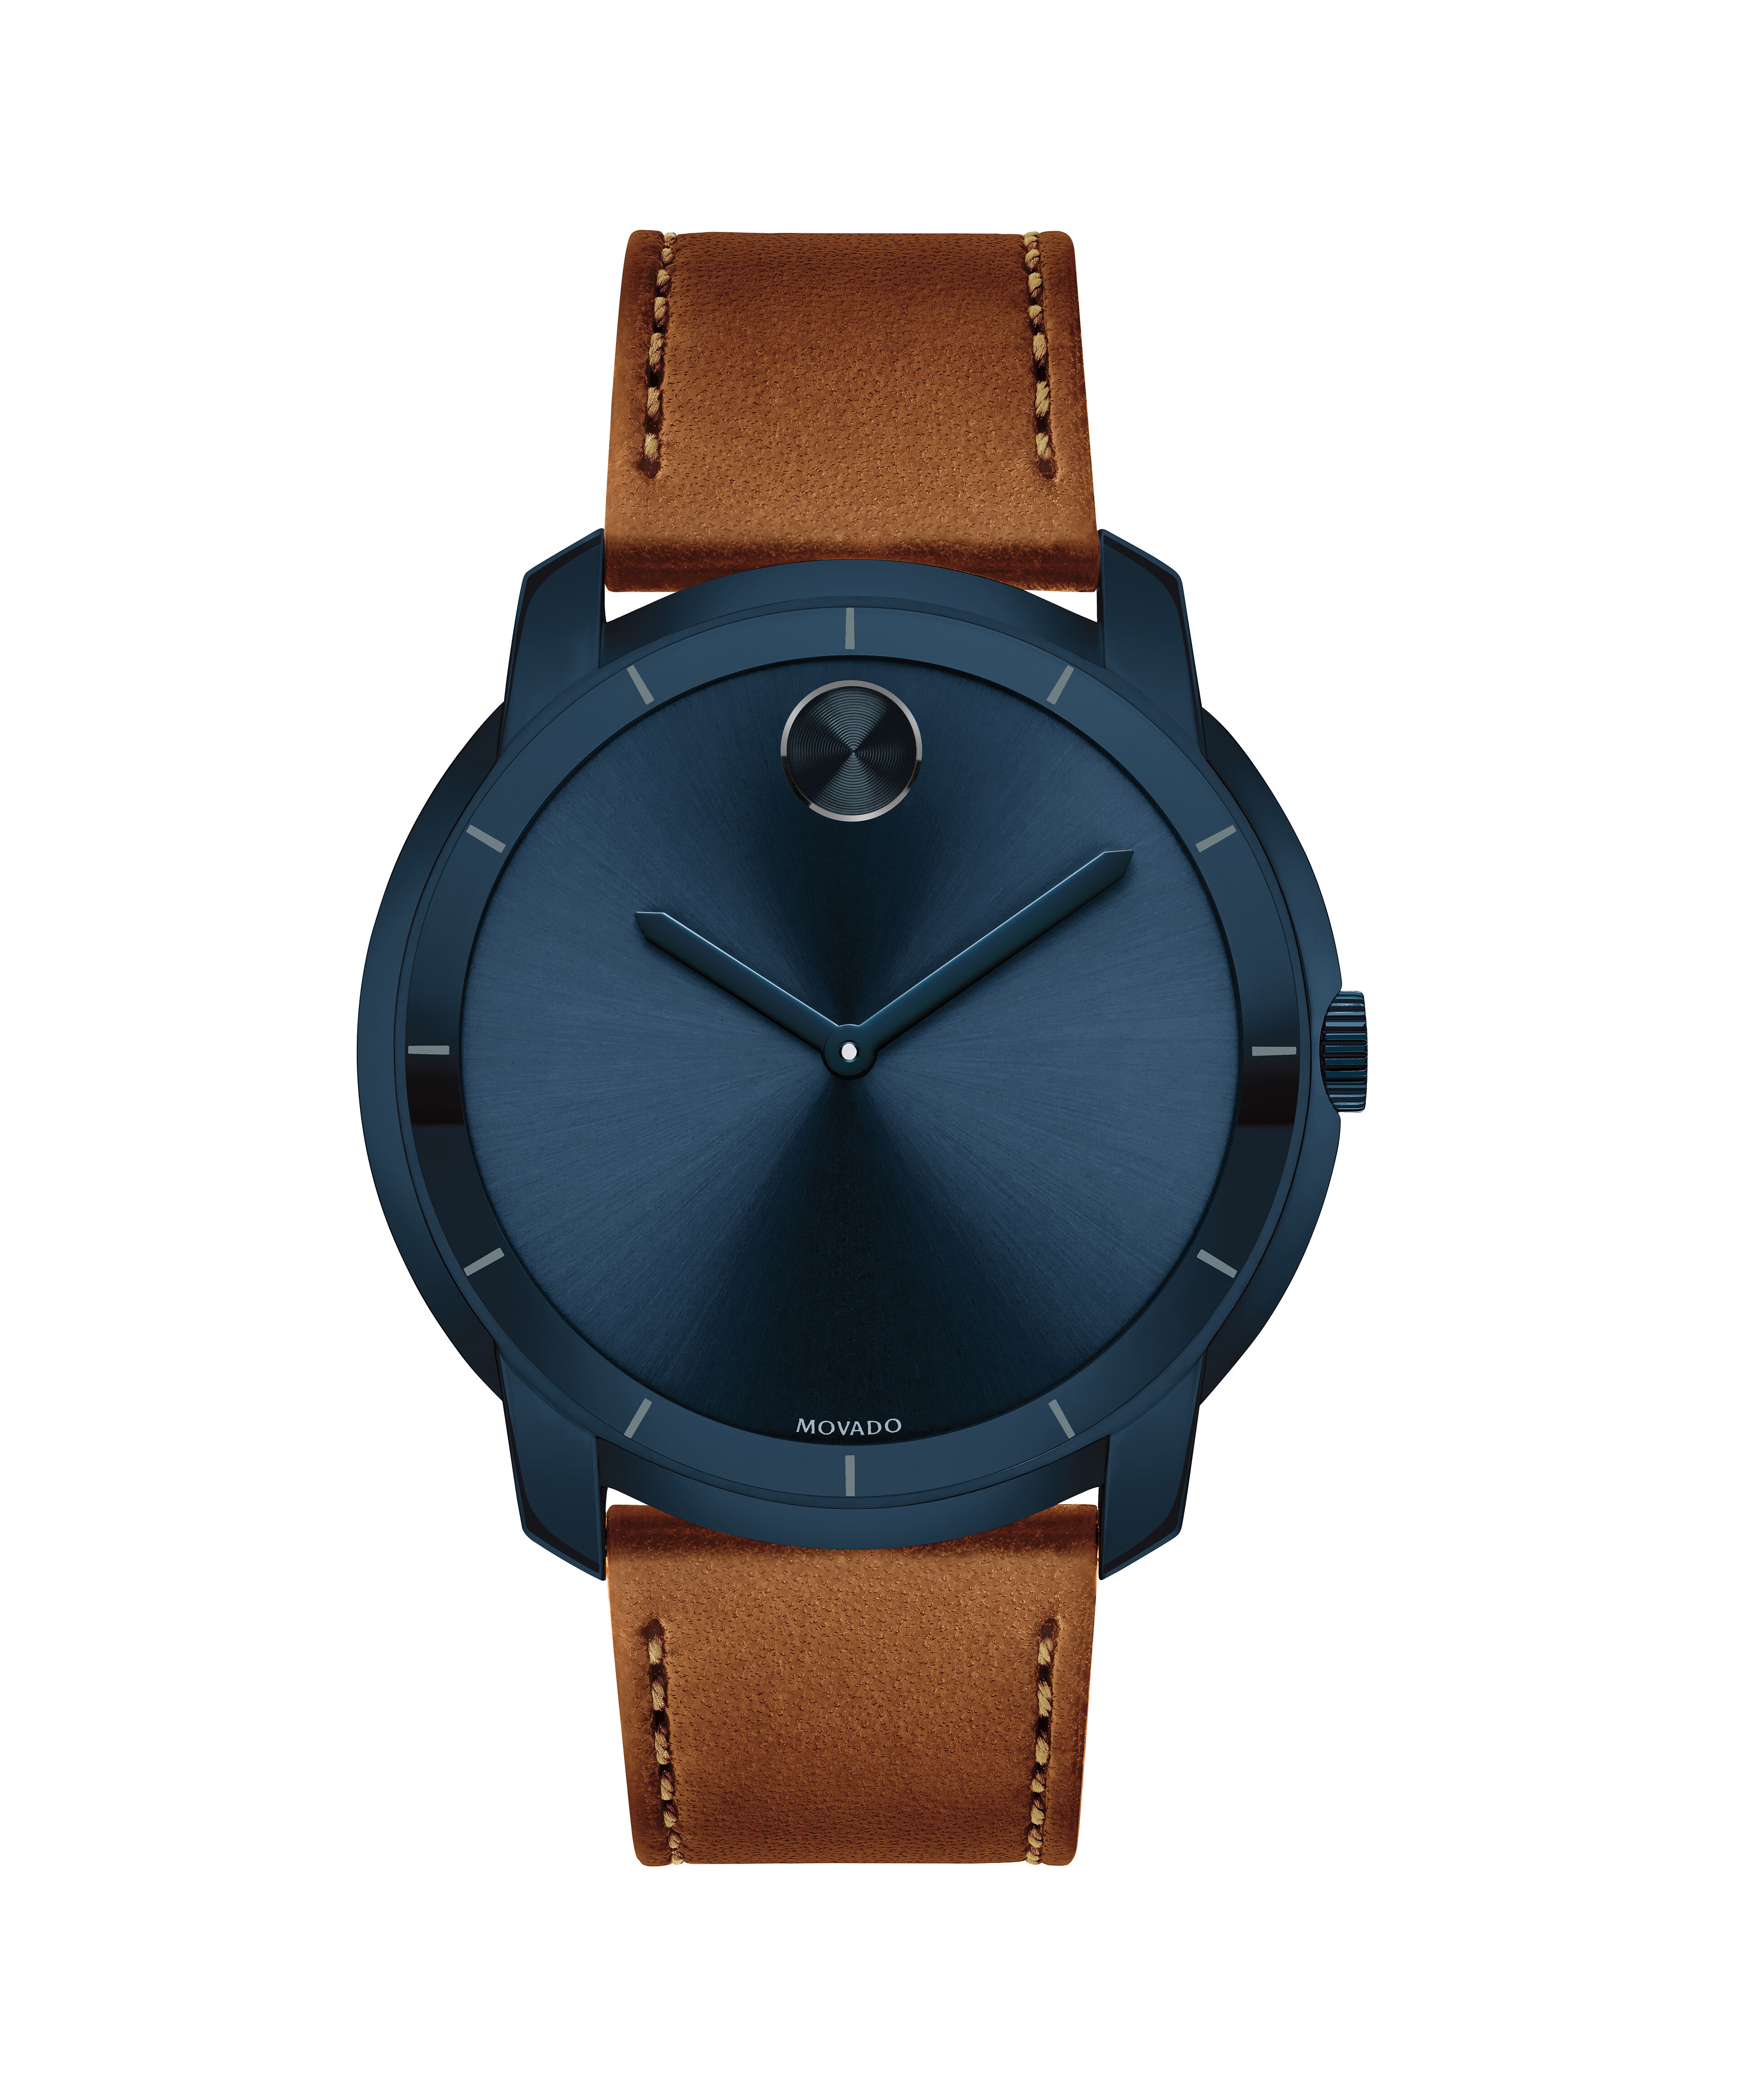 Breitling Montbrillant Replica Watches